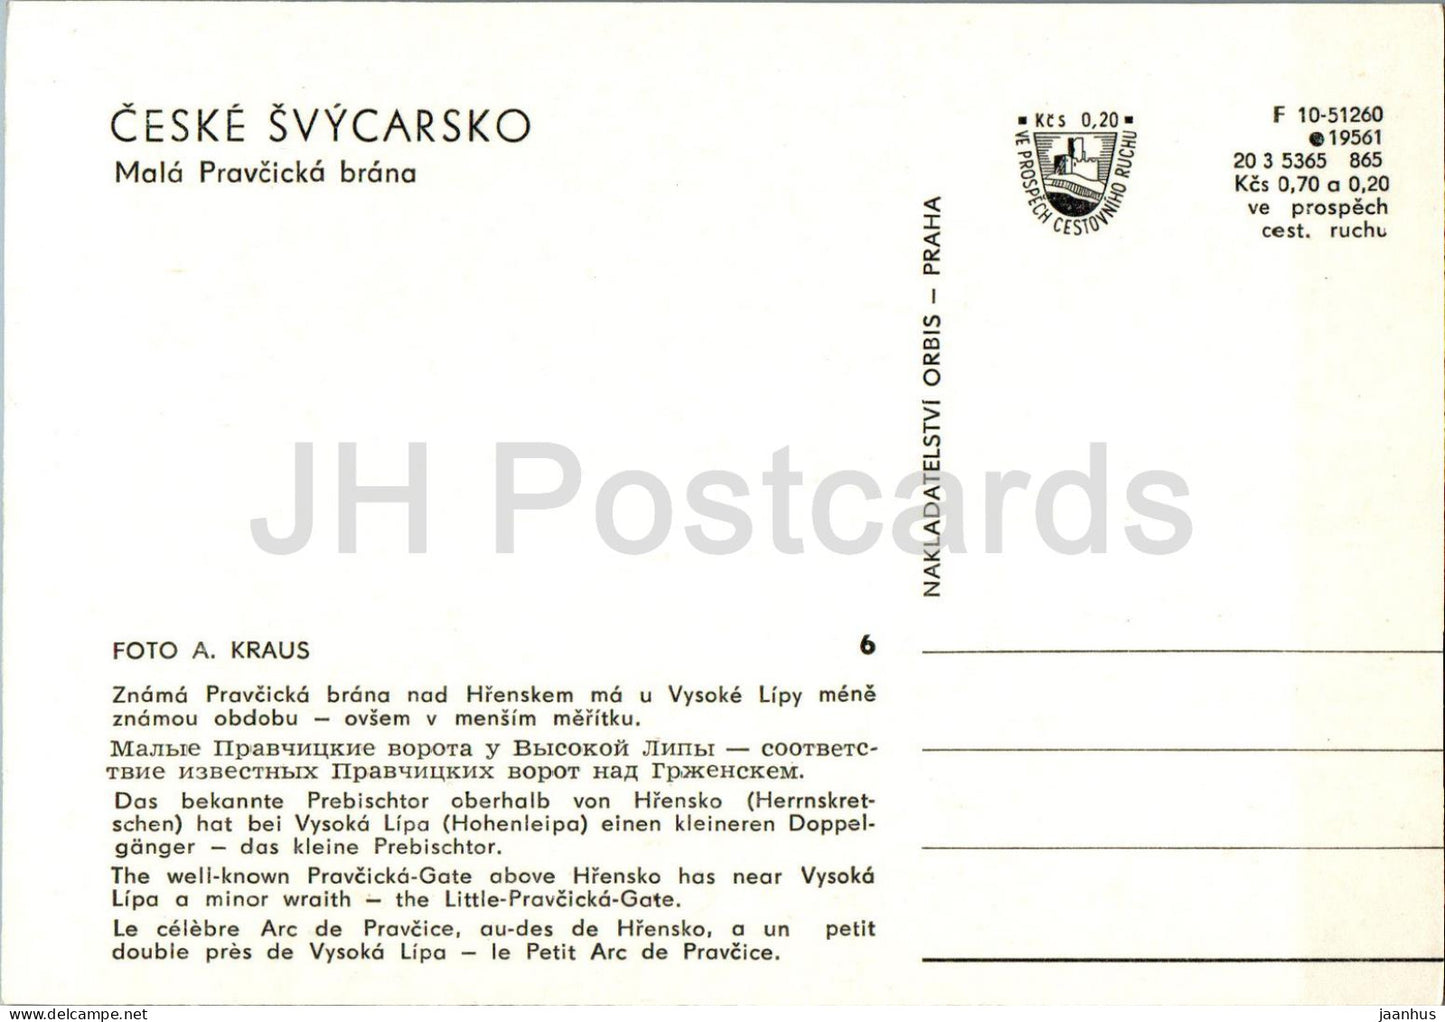 Ceske Svycarsko - The Little Pravcicka Gate - 6 - Czech Repubic - Czechoslovakia - unused